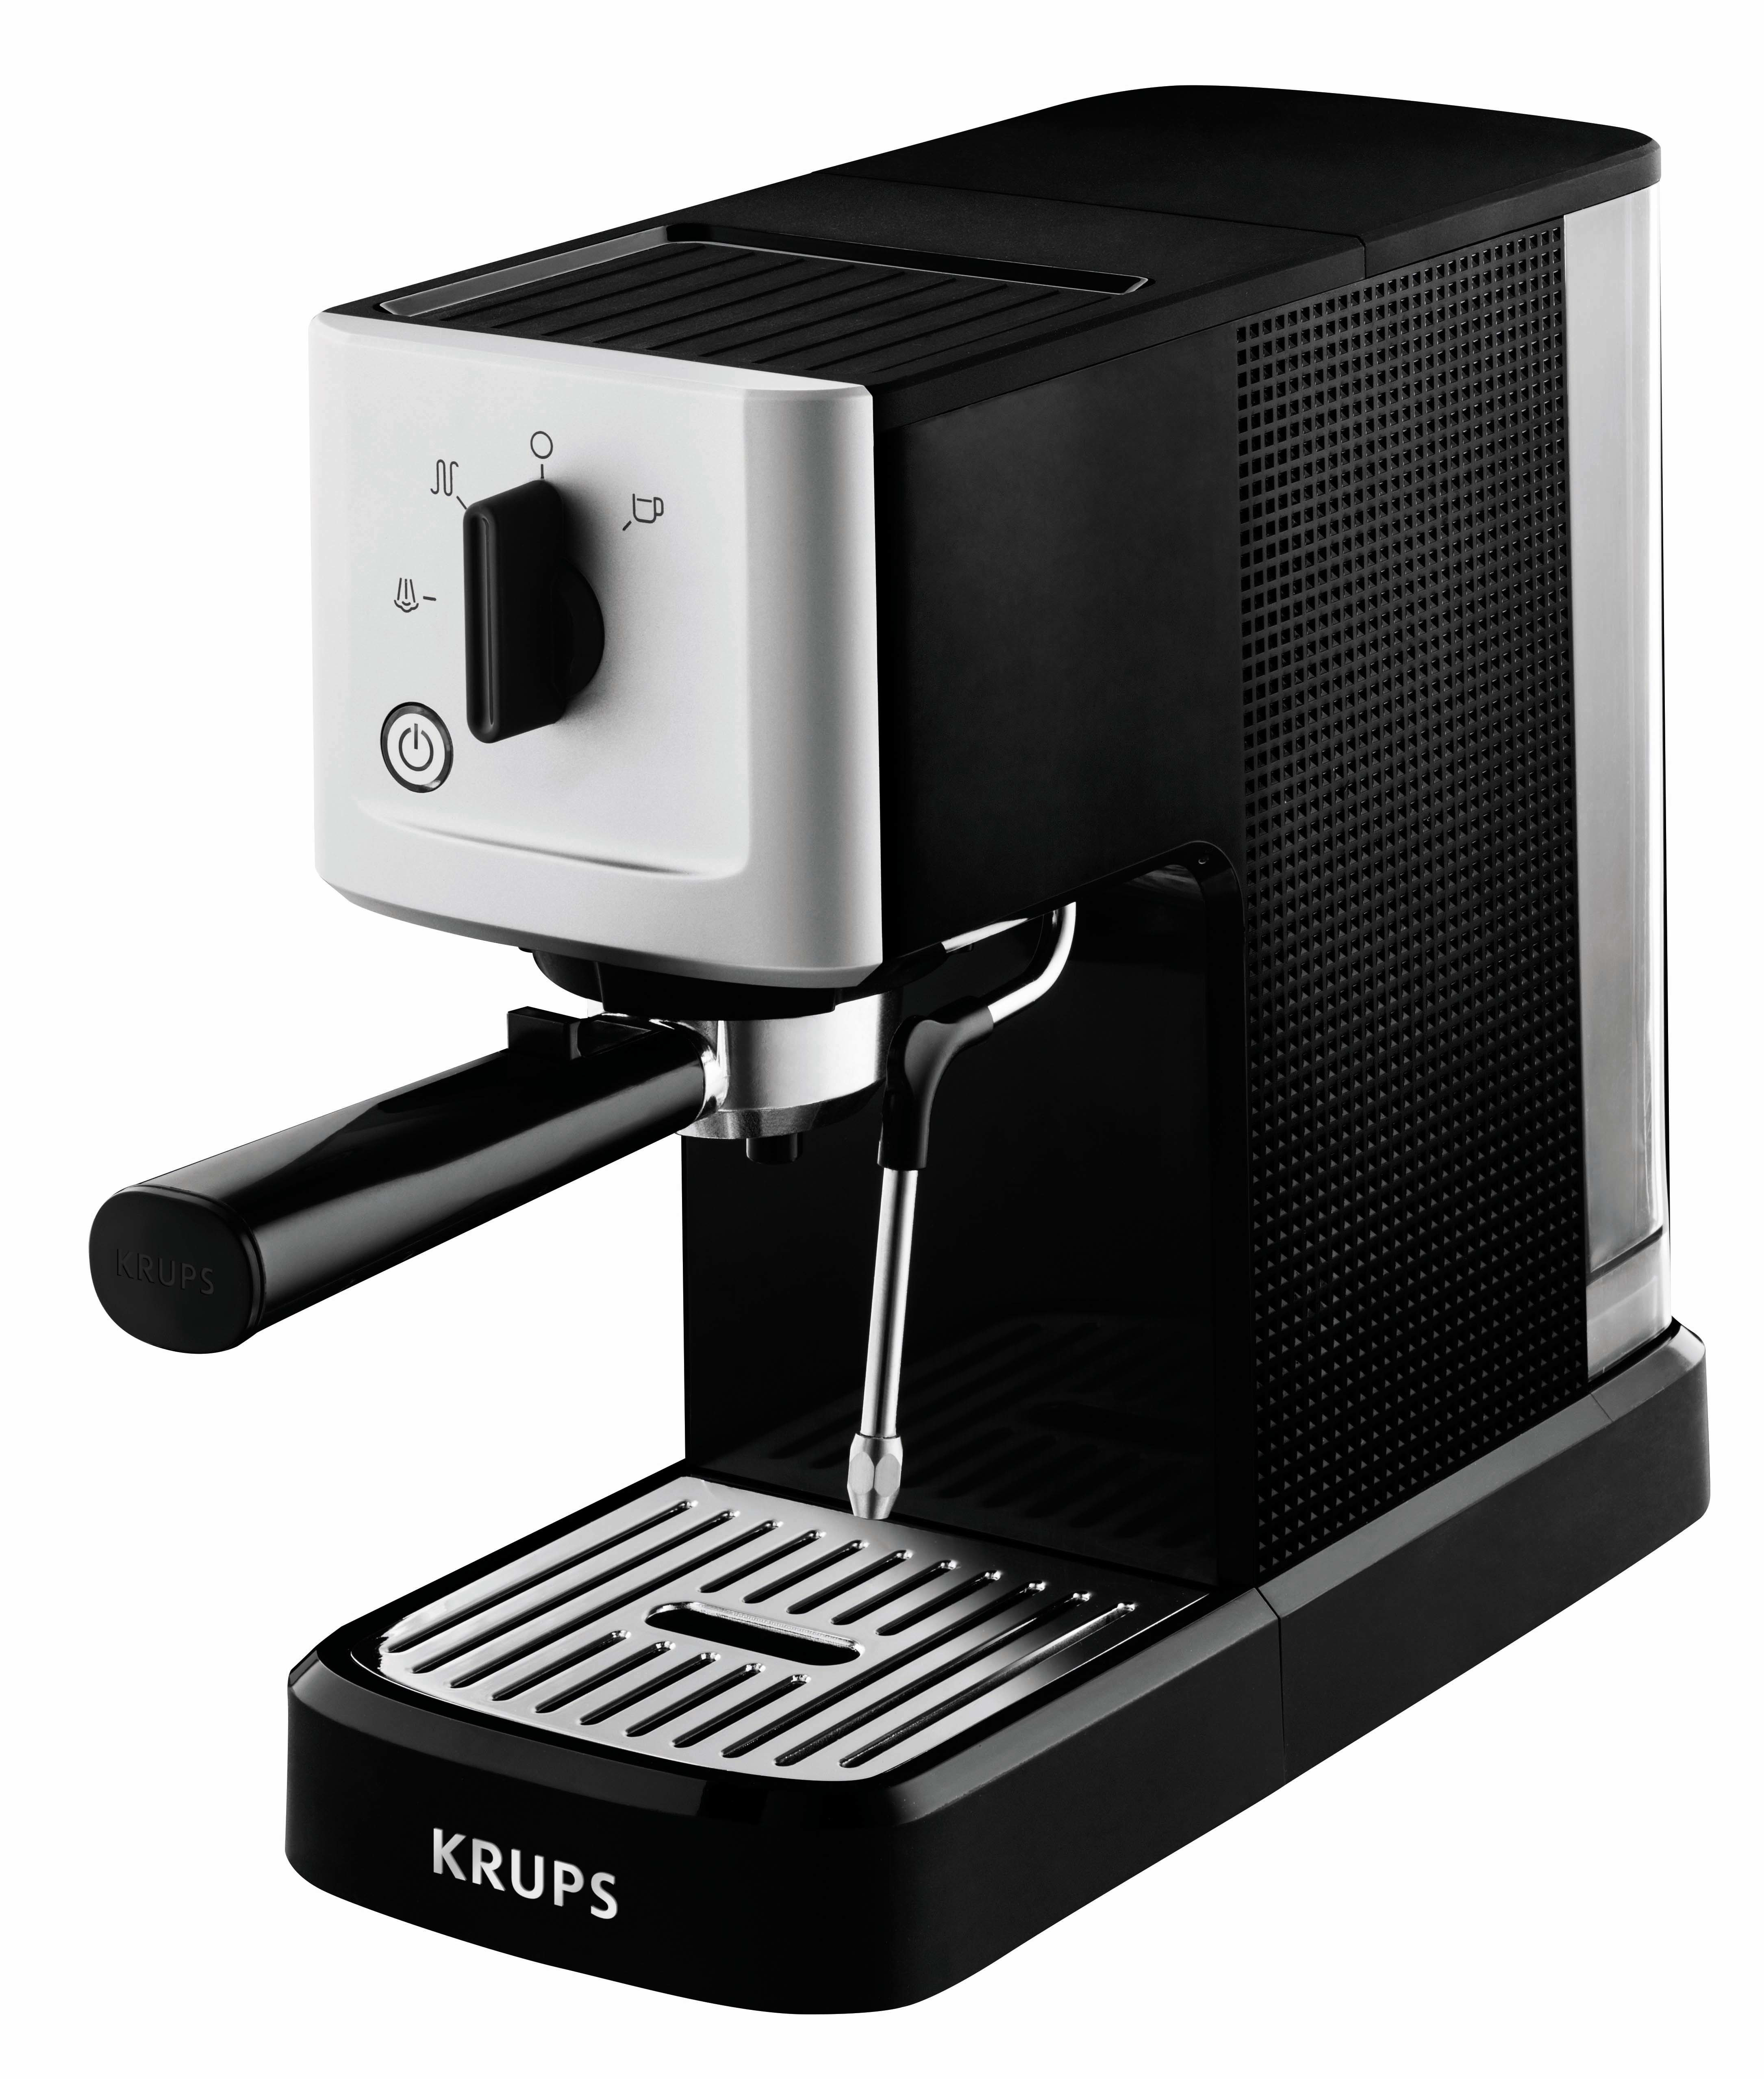 Krups Espressomachine Calvi zwart RVS XP3440 zwart, zilver